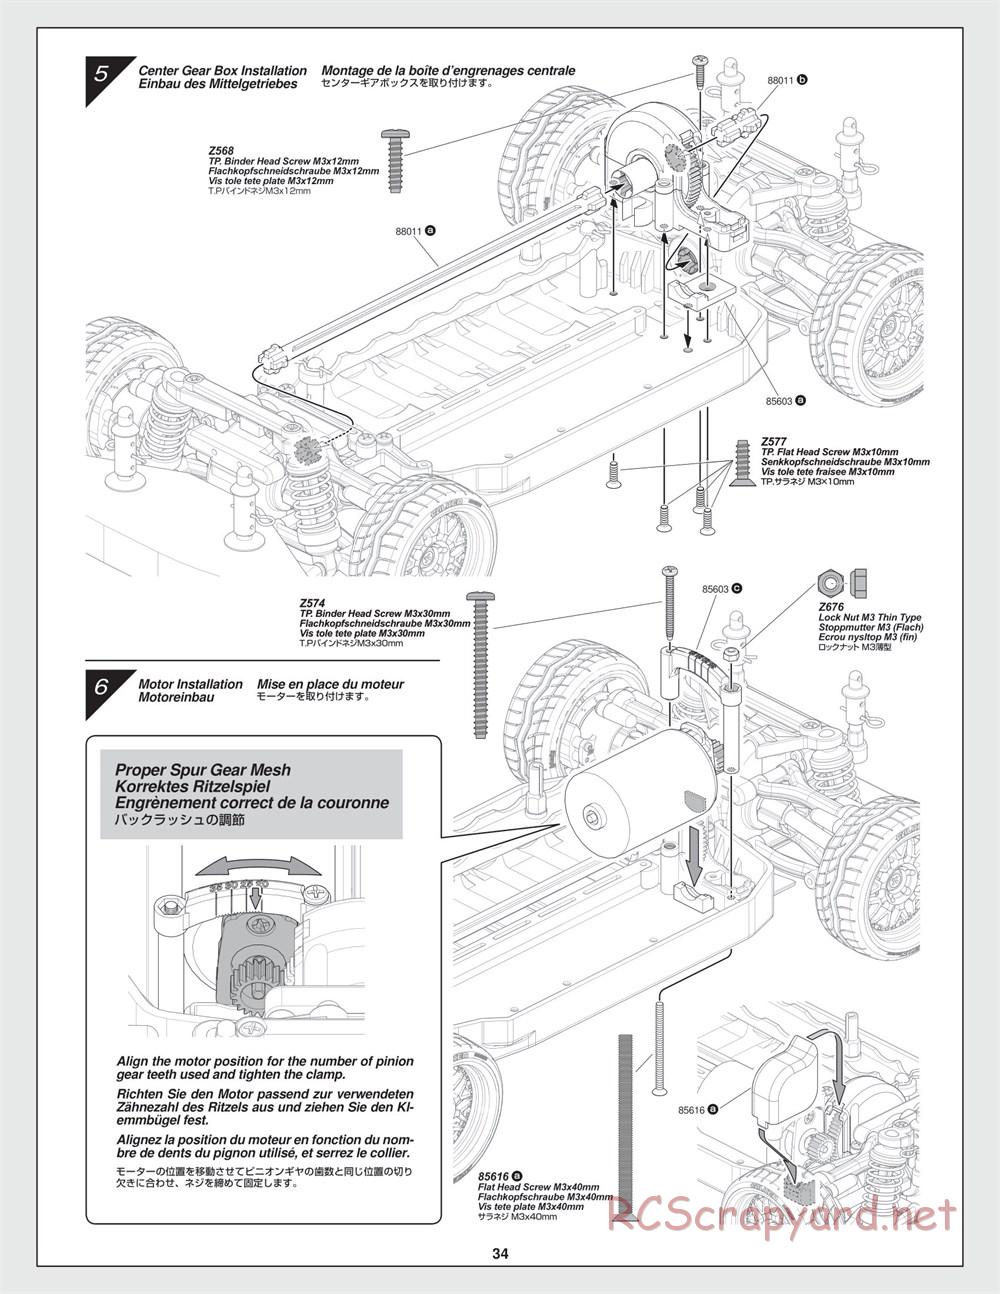 HPI - E10 Drift - Manual - Page 34